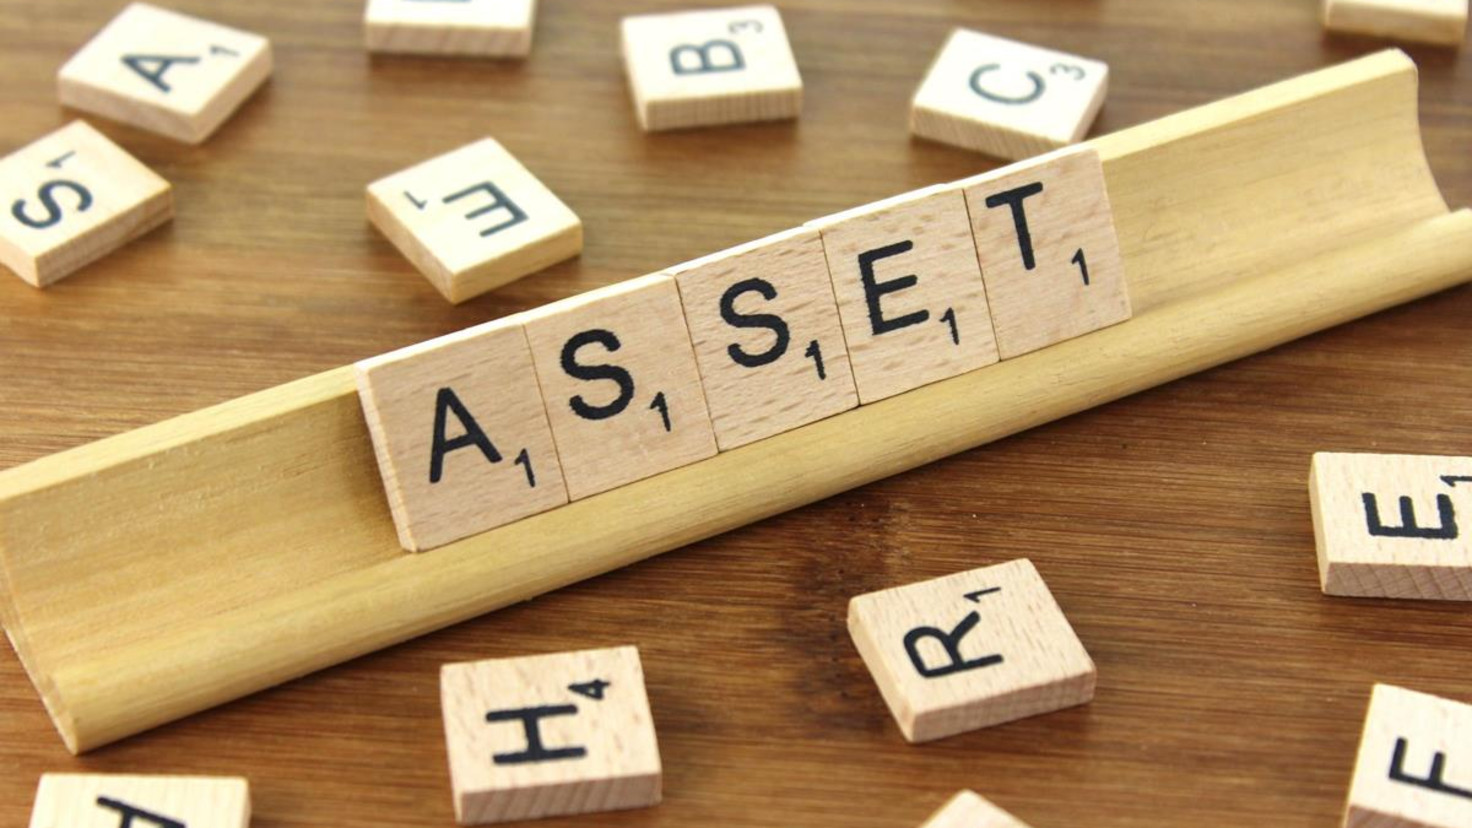 Asset definition